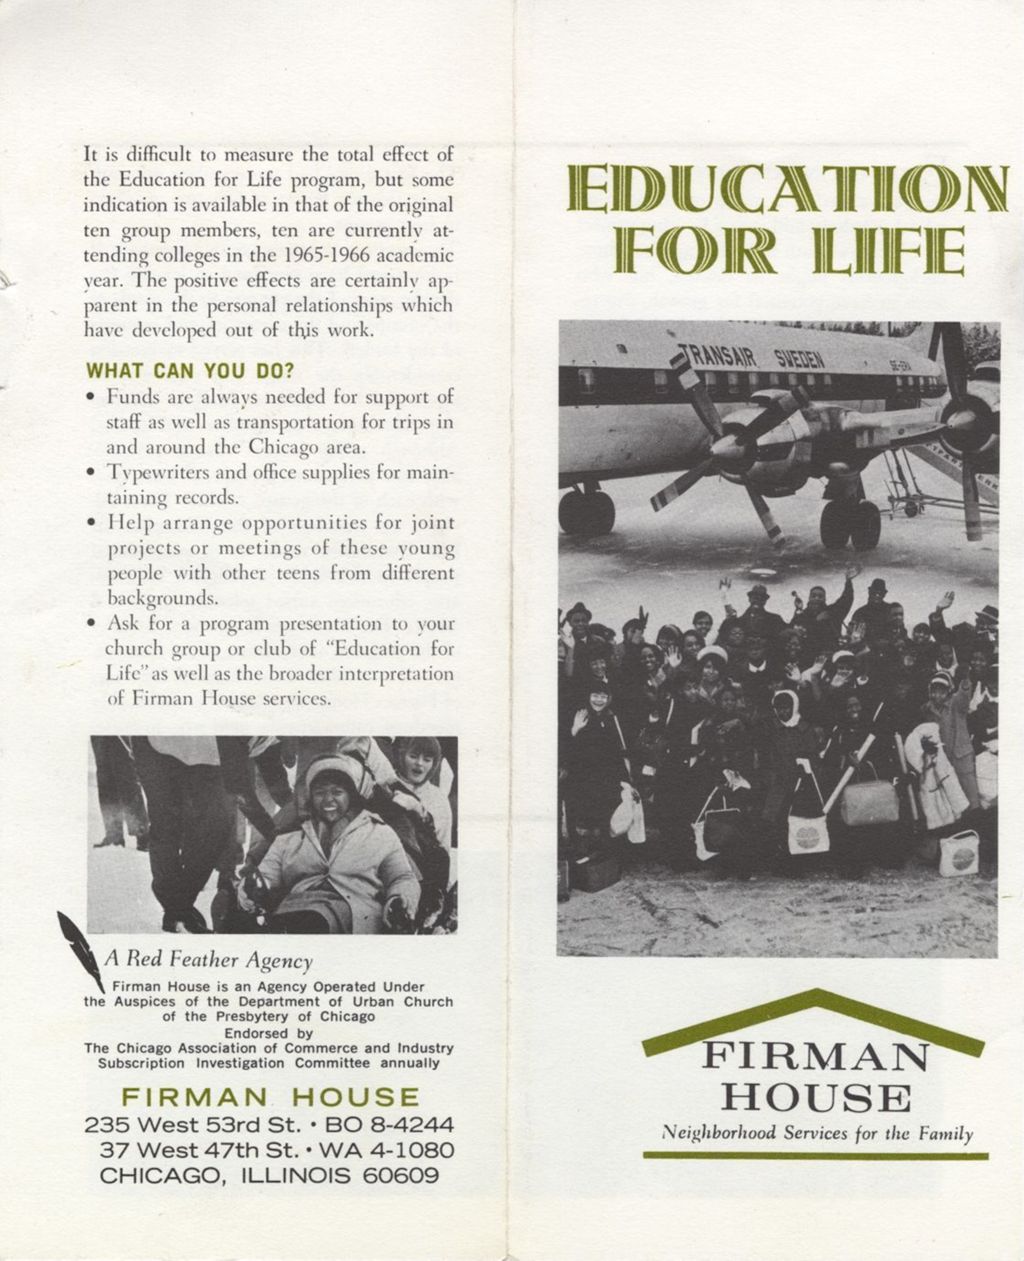 Firman House Education for Life program brochure